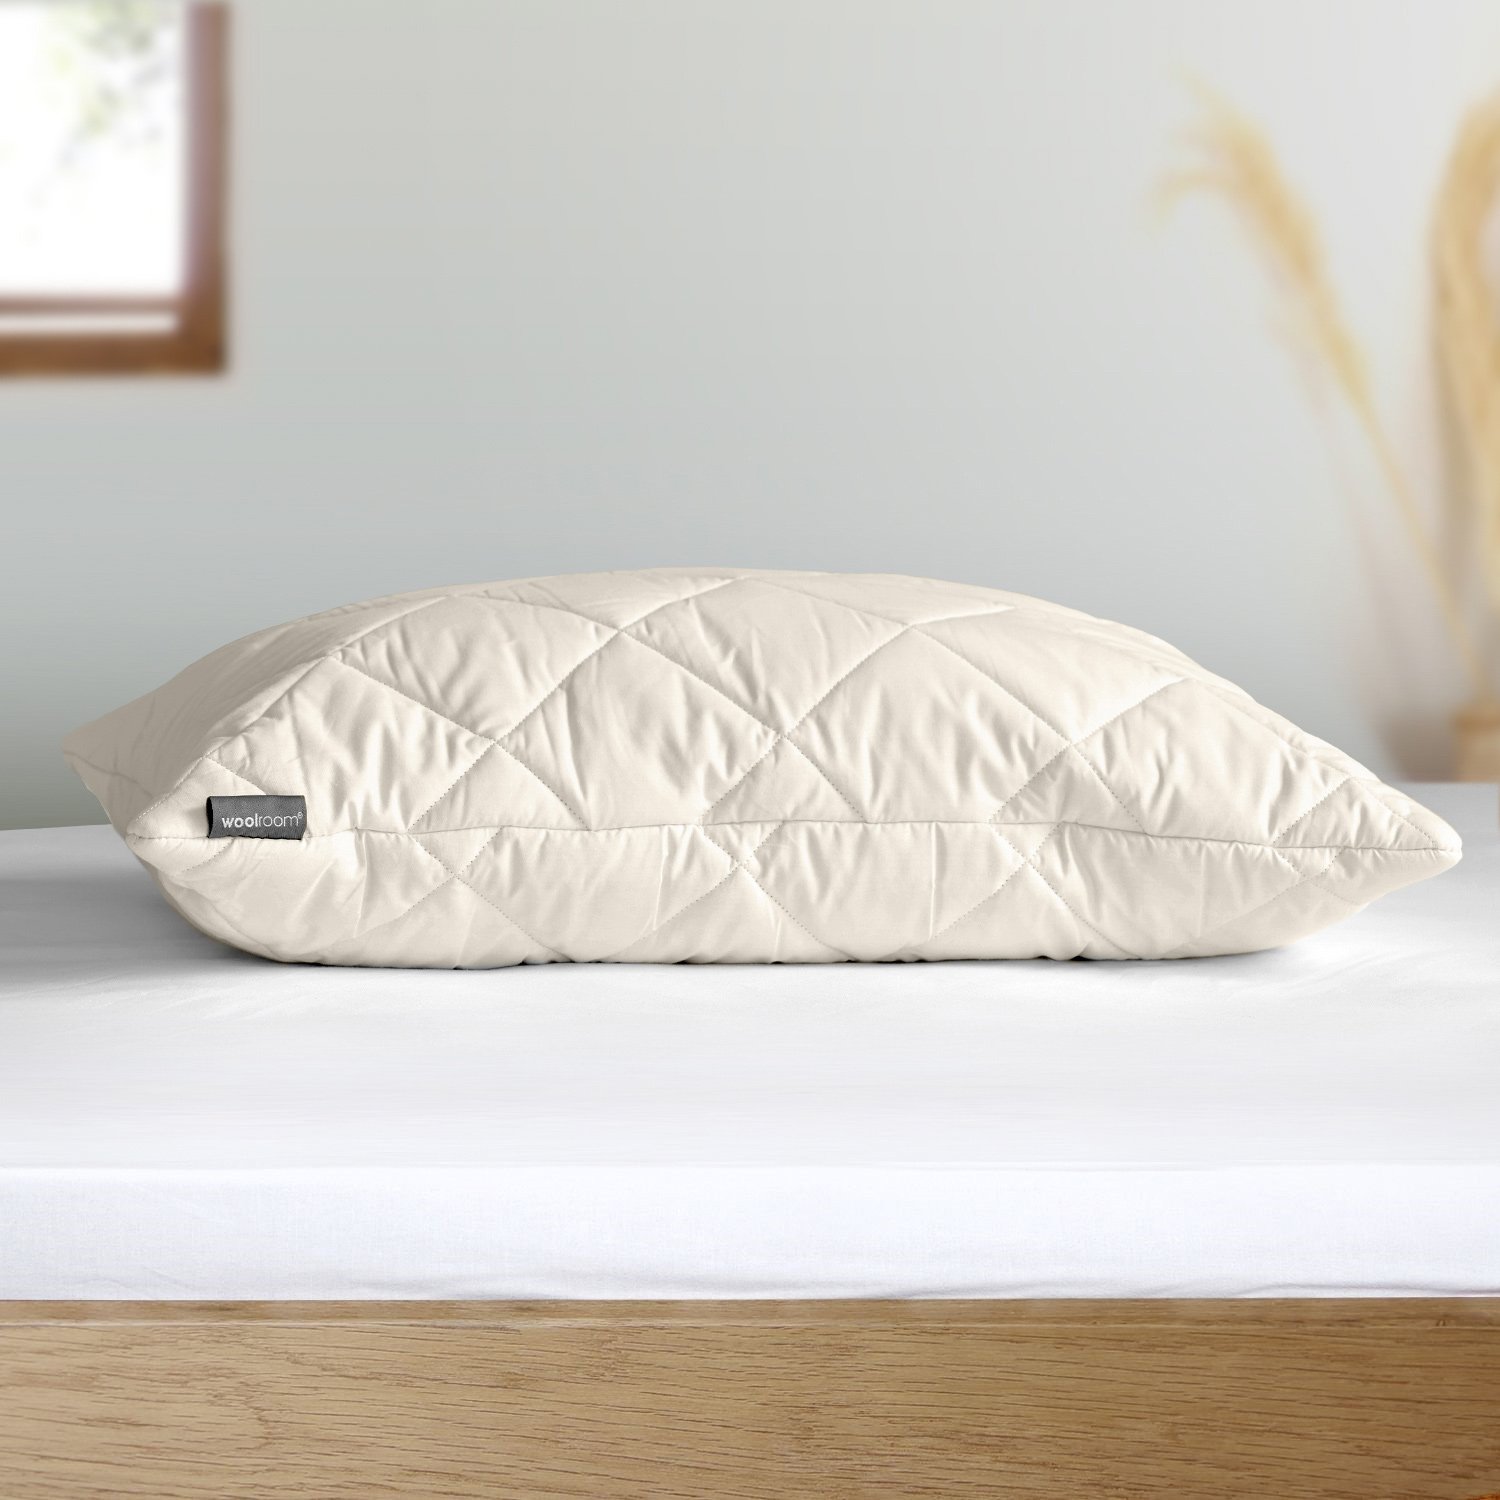 Machine Washable White Pillow Shams for Standard Size Pillows Set